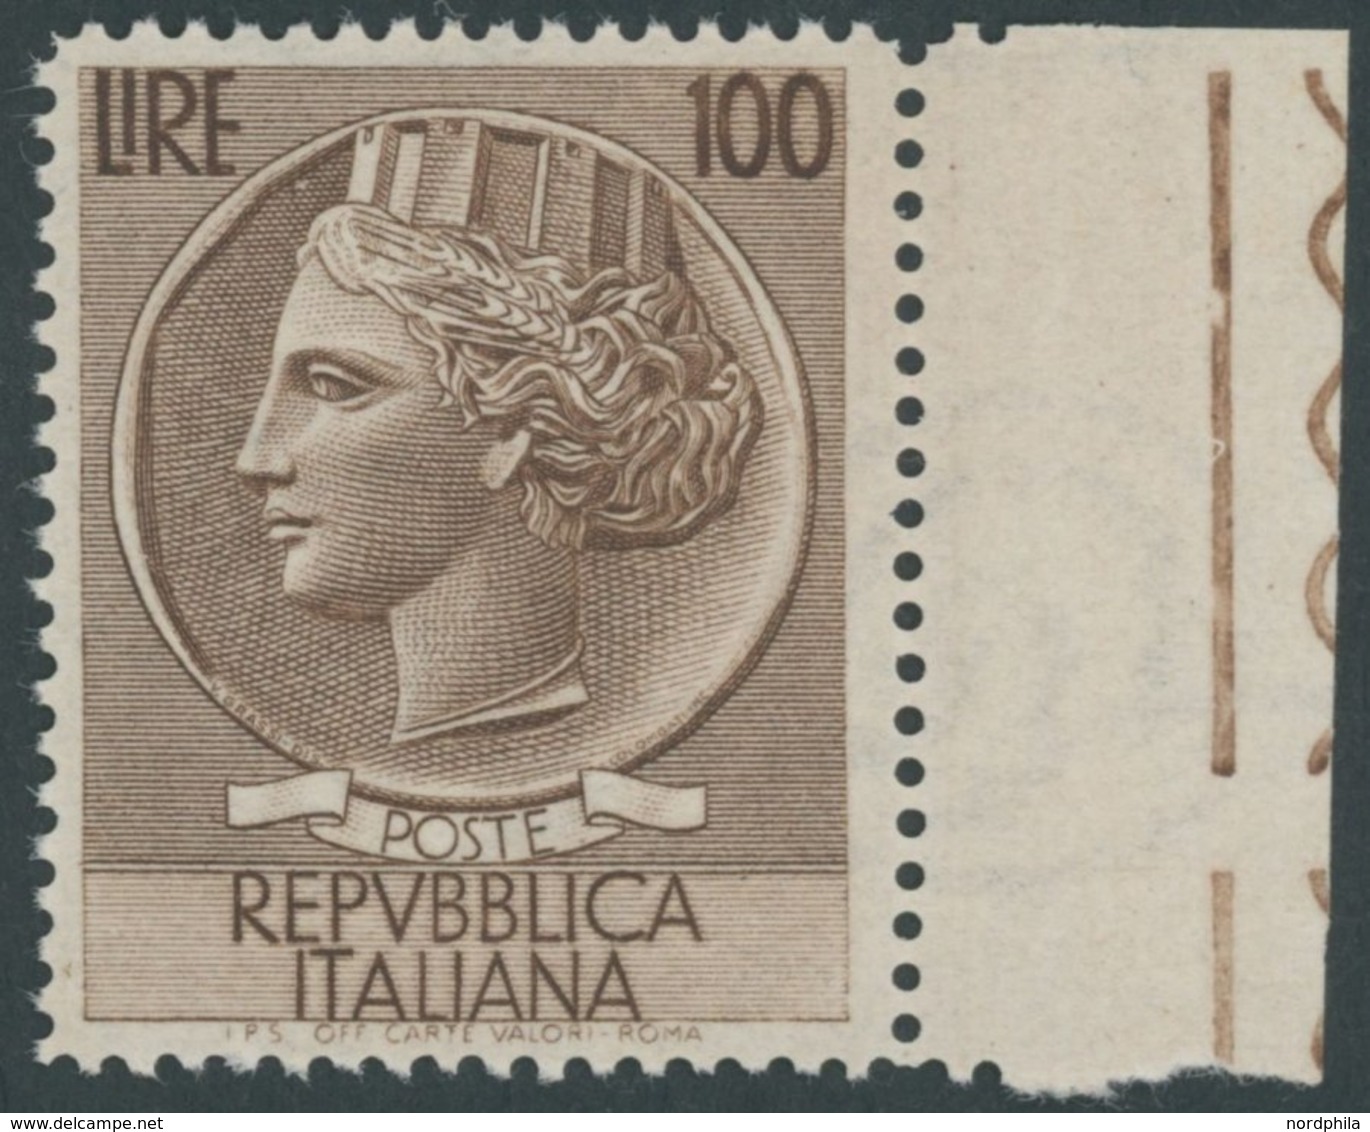 ITALIEN 920A **, 1954, 100 L. Braun, Wz. 3, Gezähnt L 131/4, Postfrisch, Pracht, Mi. 200.- - Non Classés